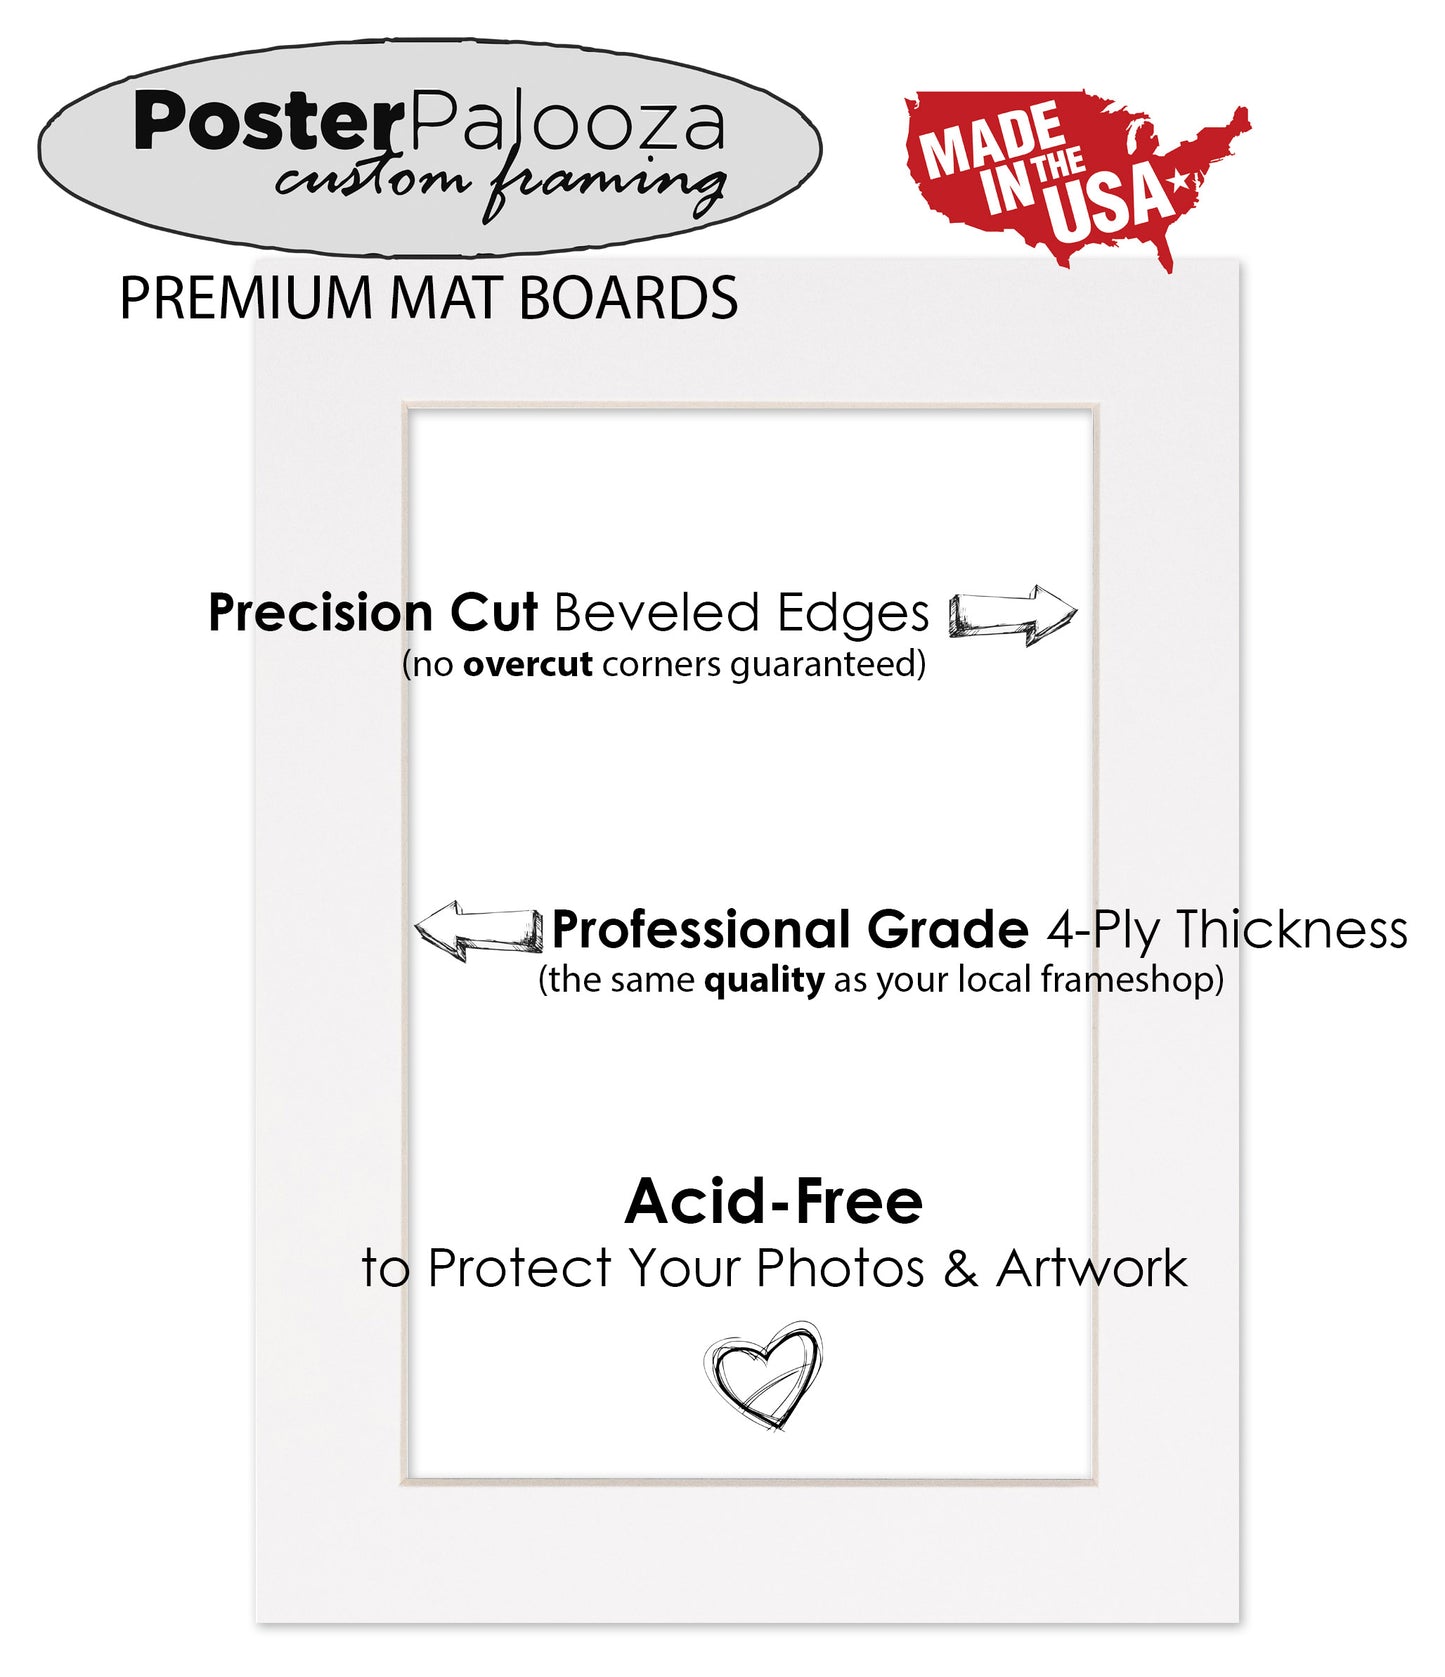 Pack of 10 Metallic Silver Precut Acid-Free Matboards